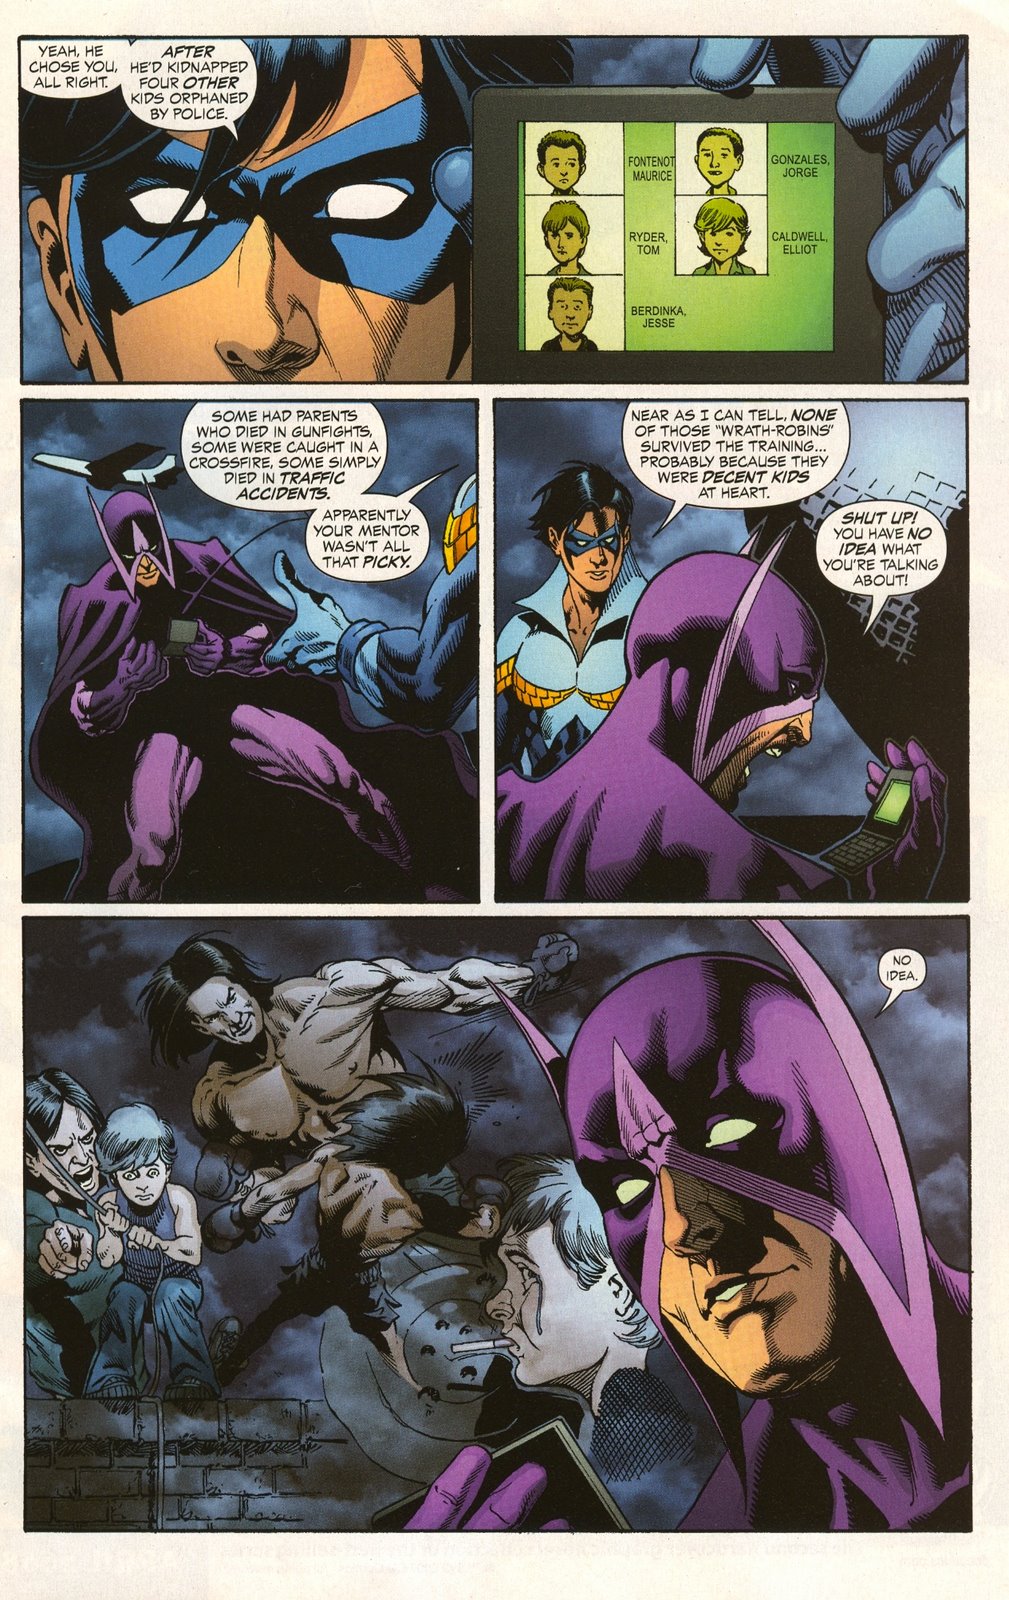 [Batman+Comic+Page.jpg]